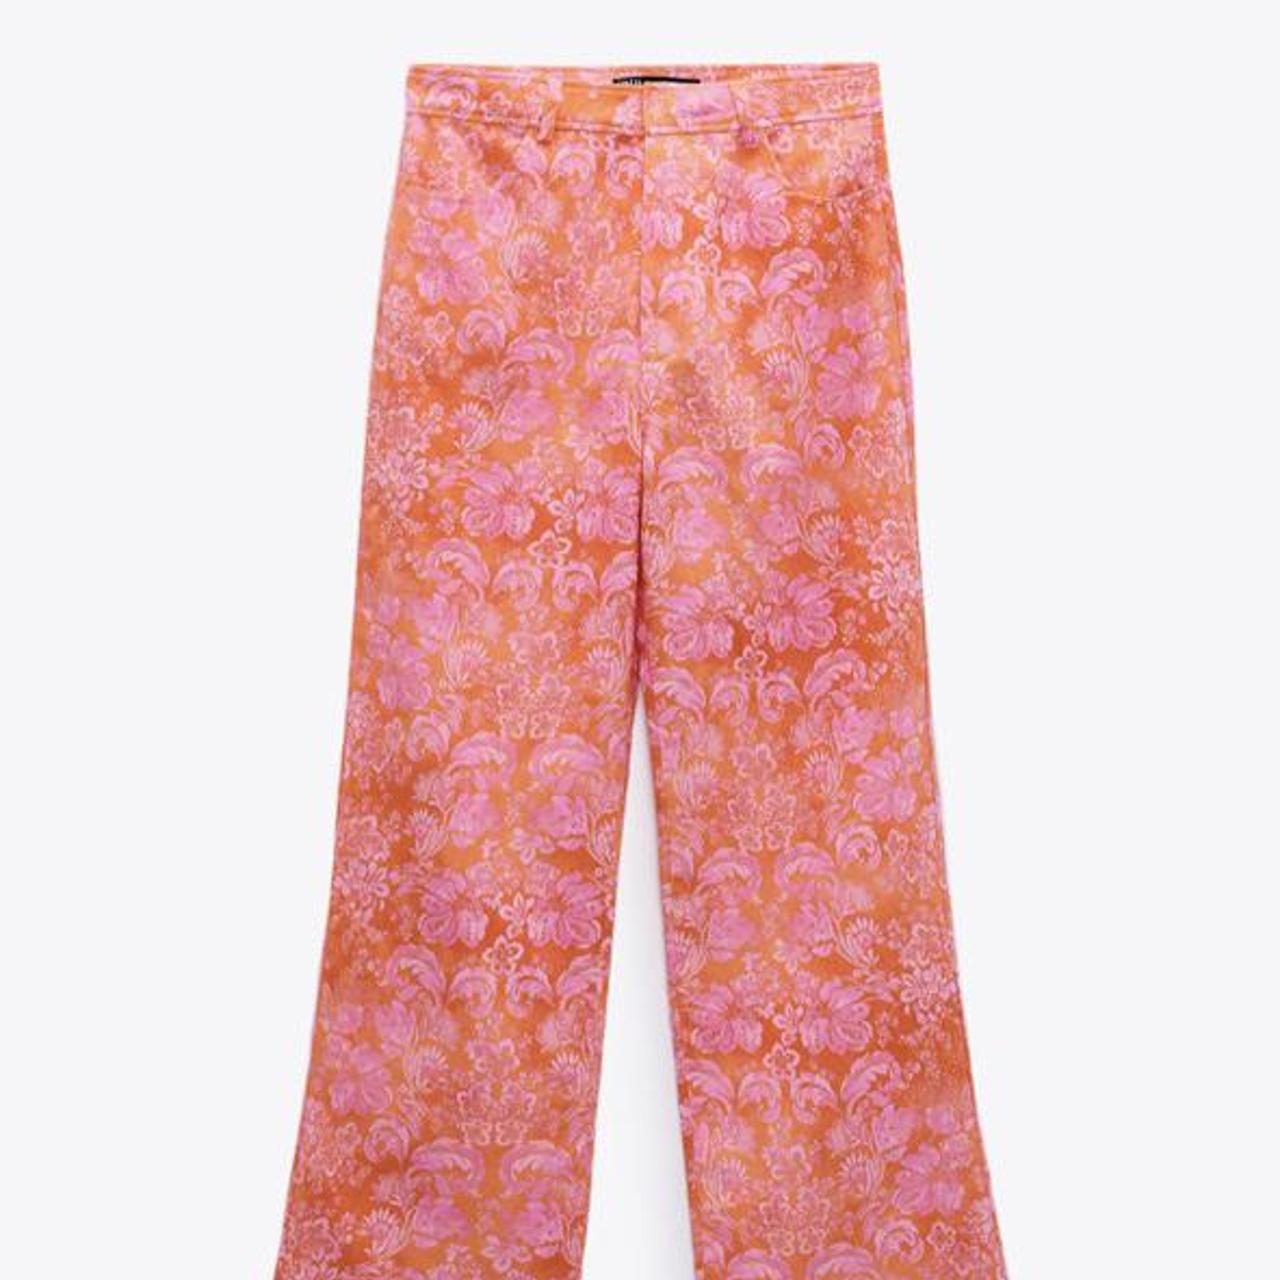 ZARA PINK ORANGE Purple Floral Print Flared Style Trousers pants Blogger UK  XS £25.00 - PicClick UK